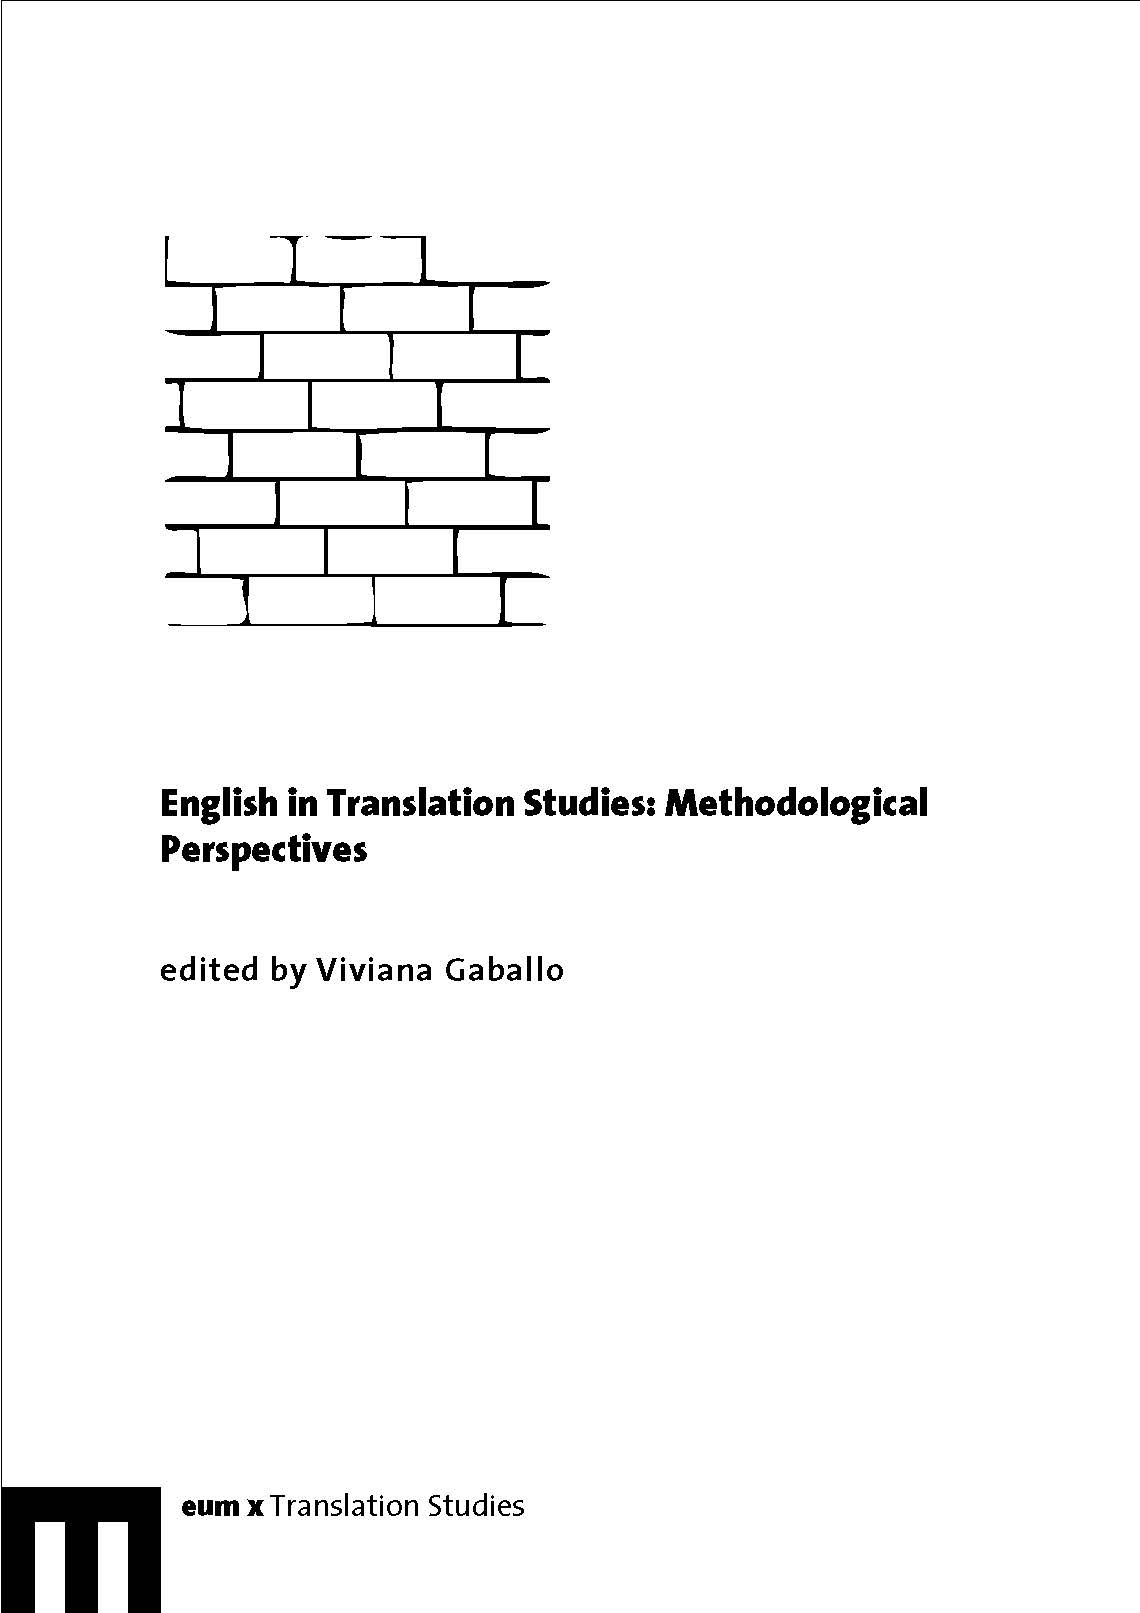 English in Translation Studies: Methodological Perspectives